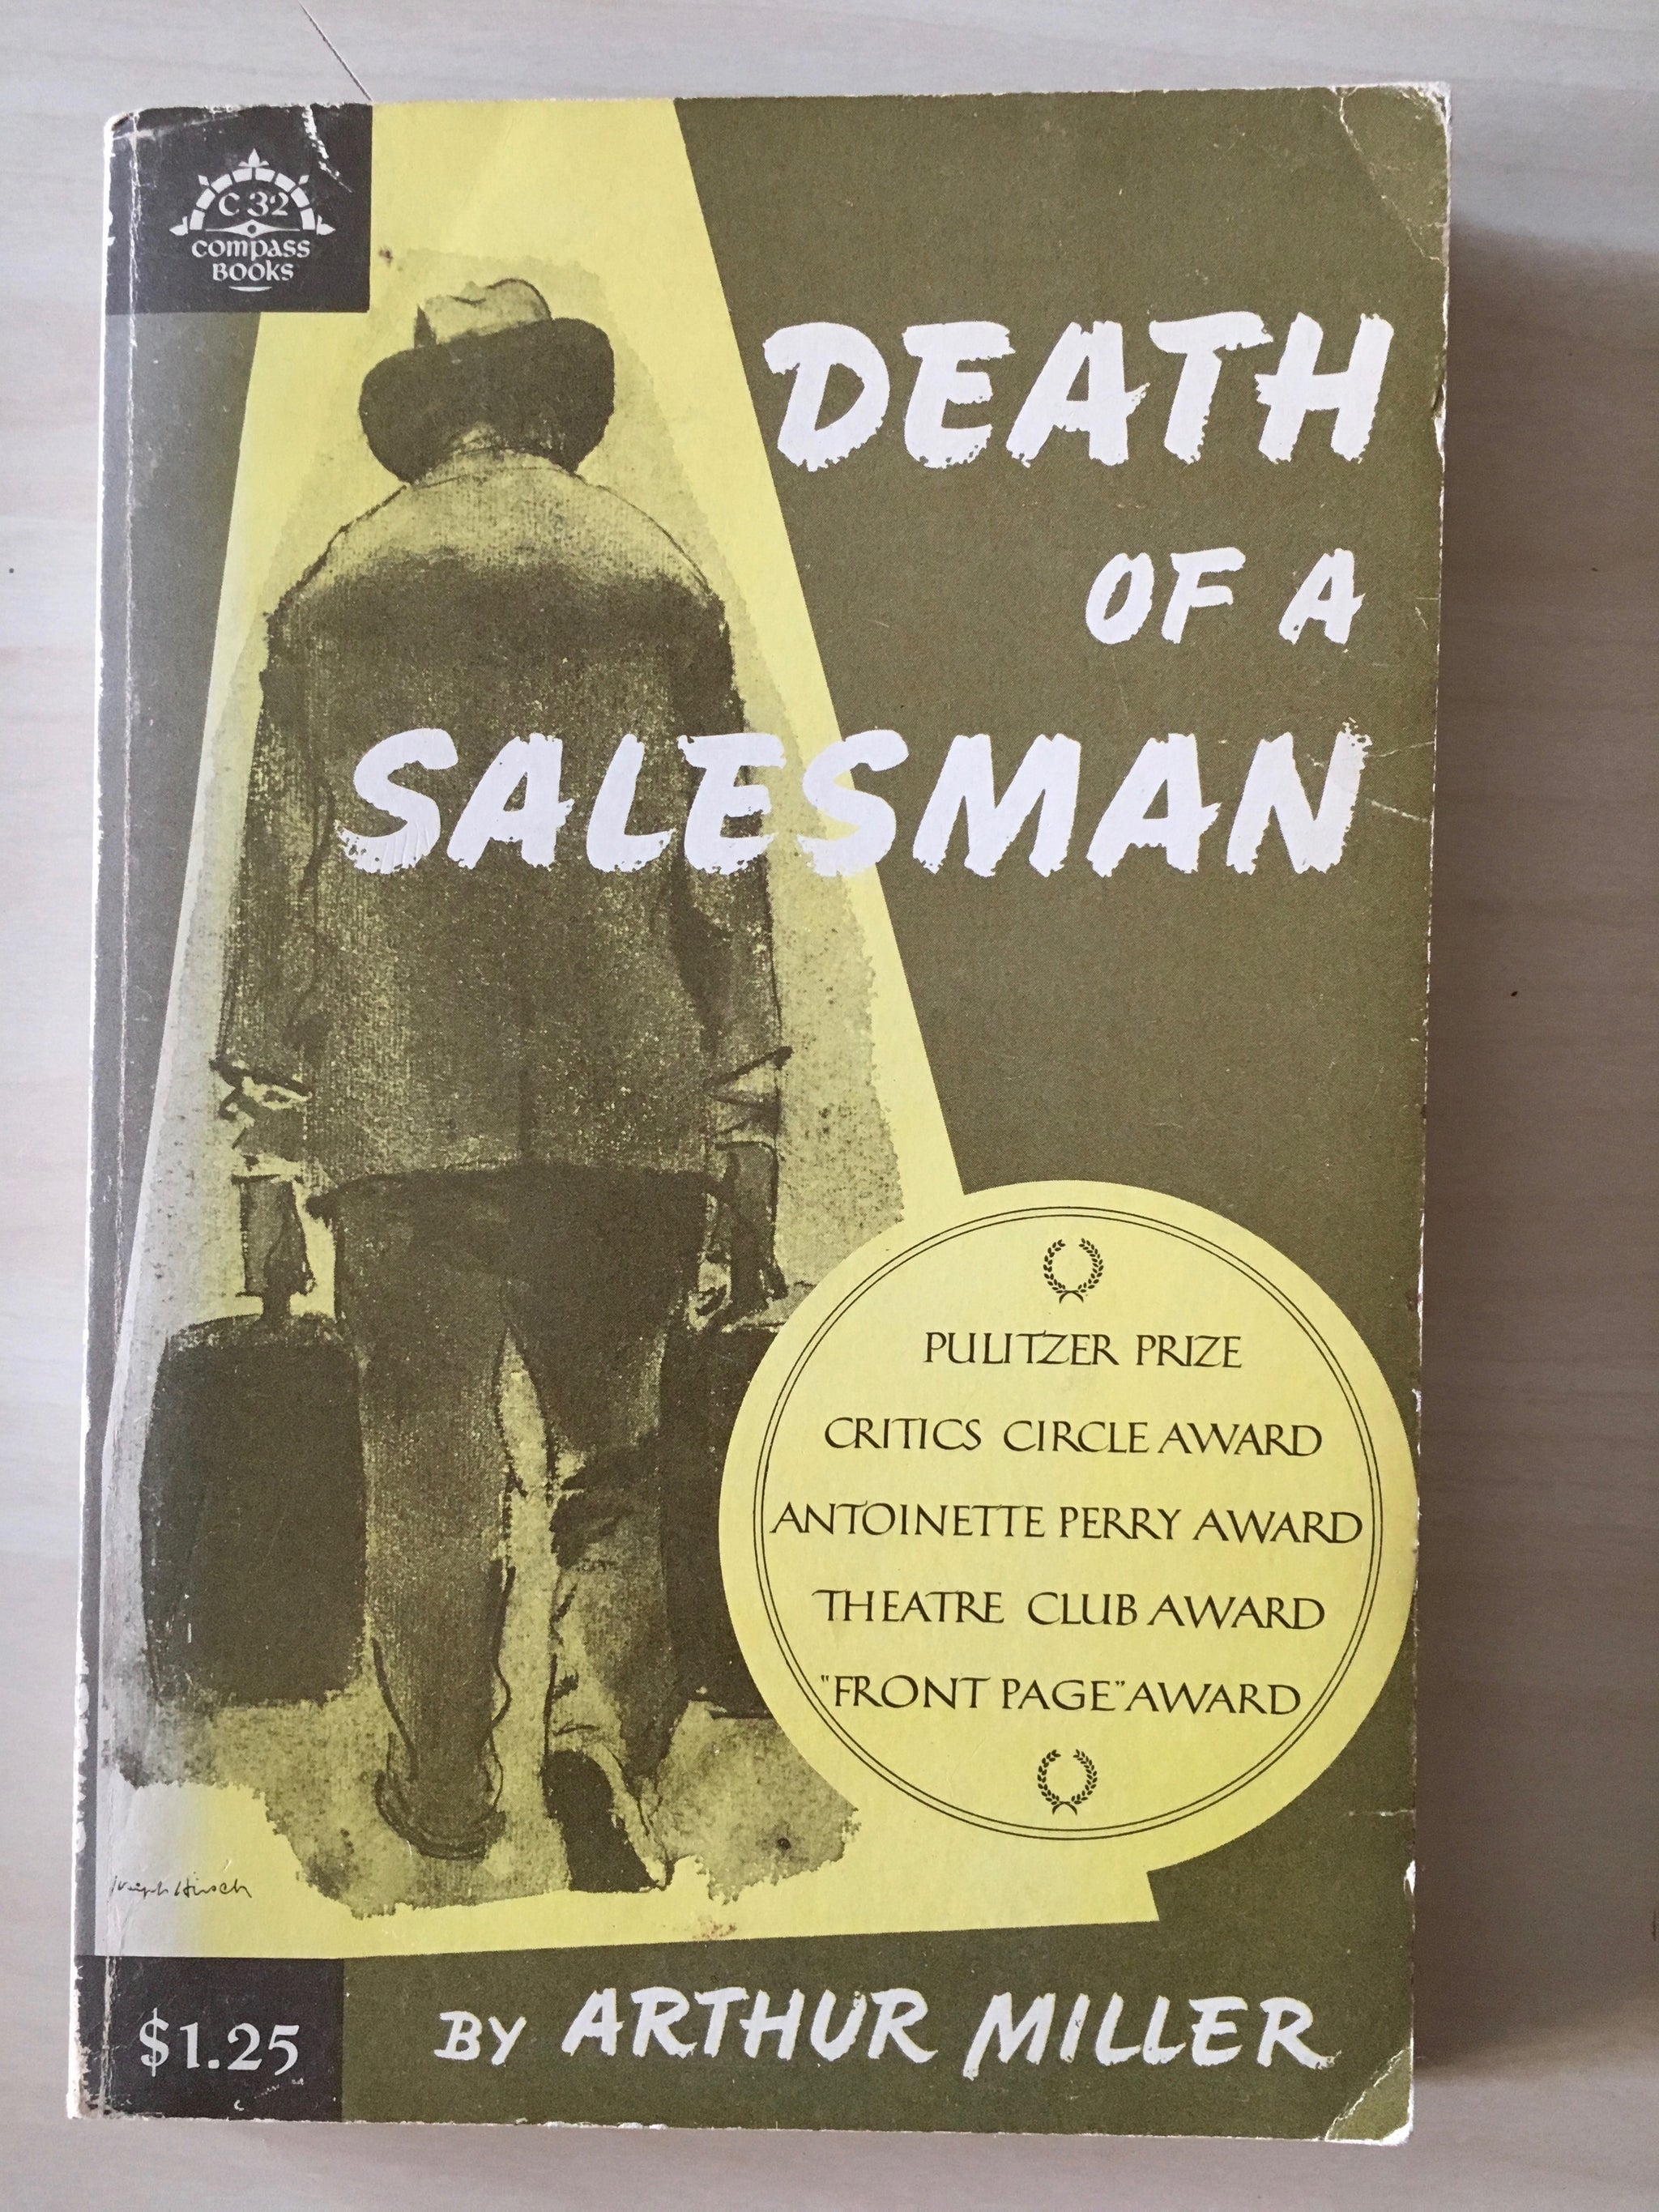 script analysis death of a salesman